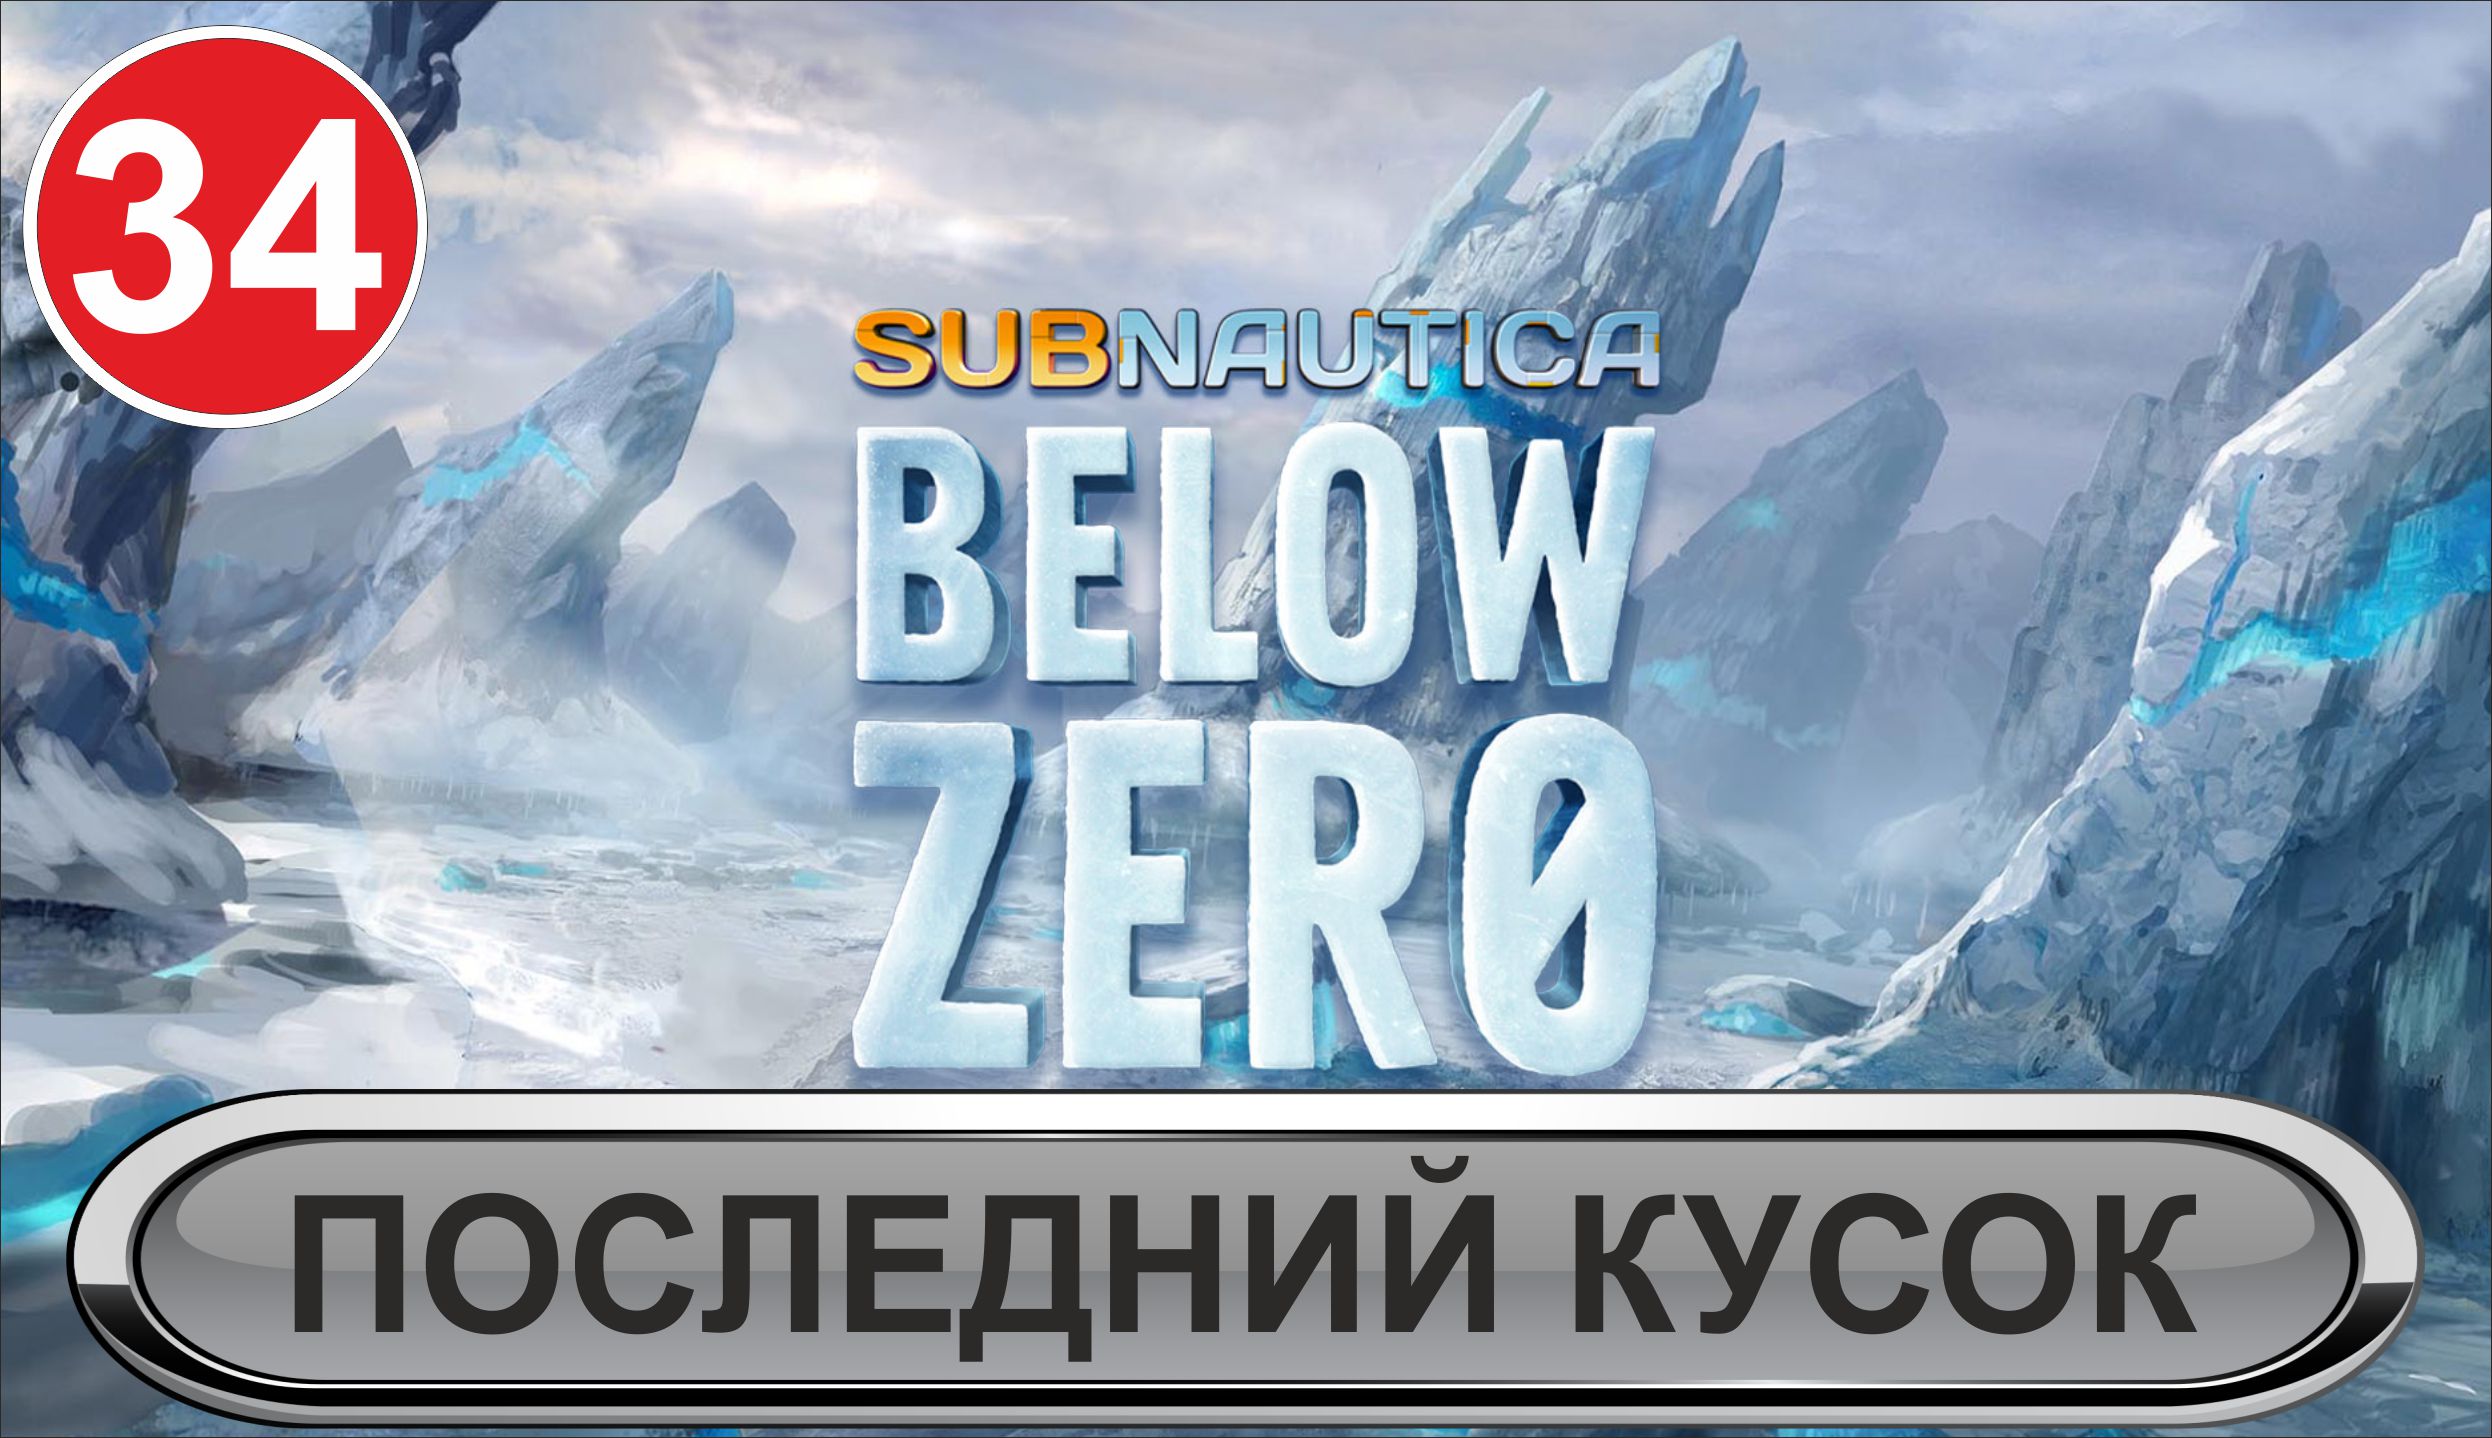 Subnautica: Below Zero - Последний кусок